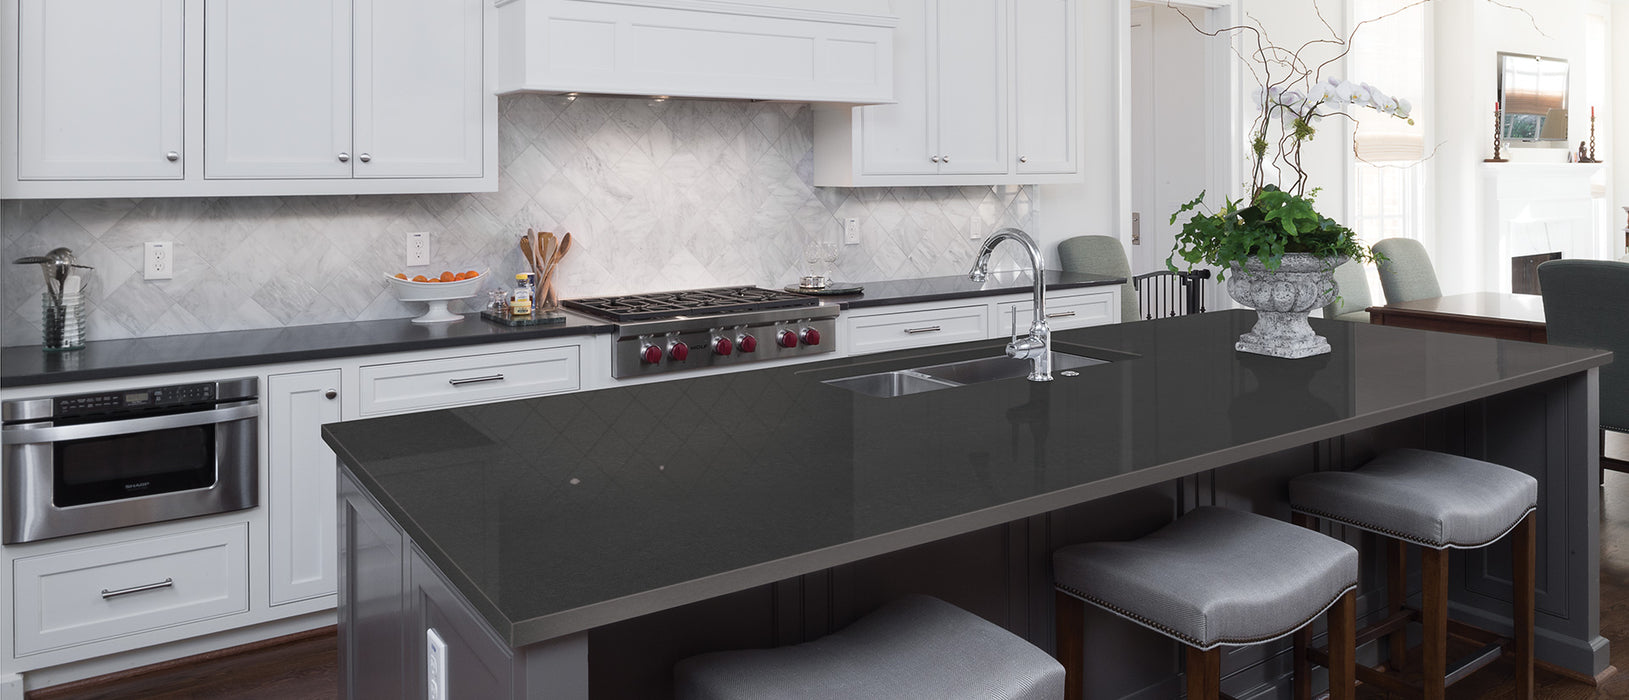 Shadow gray quartz countertop kitchen scene